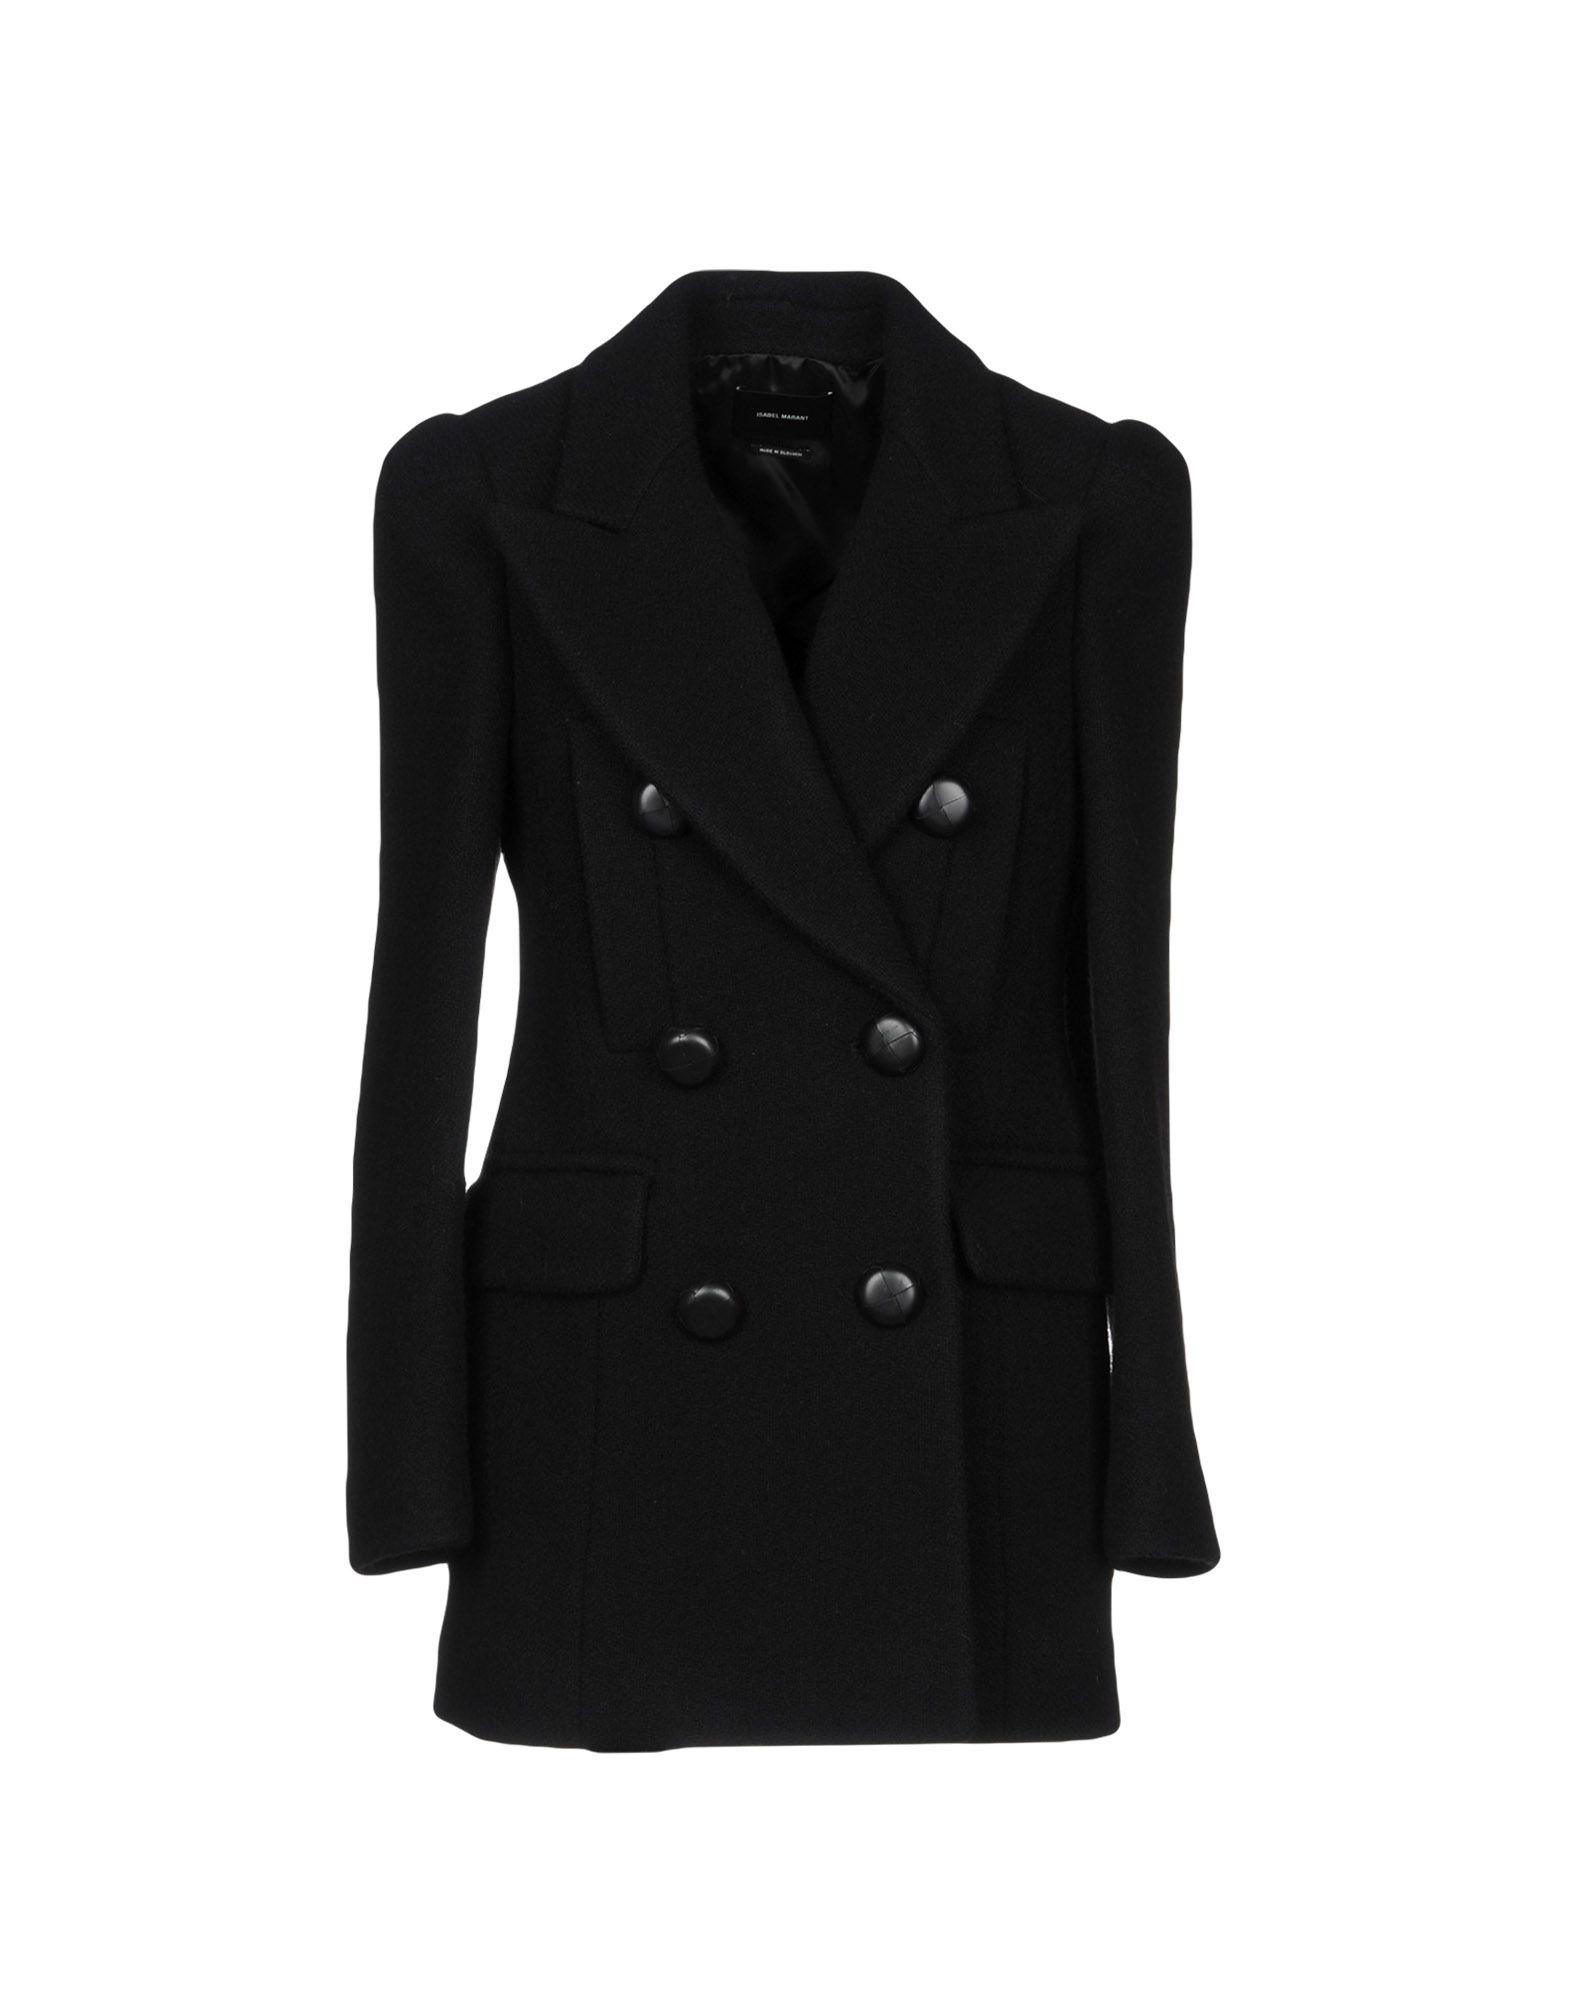 Isabel Marant Tweed Coat in Black - Lyst